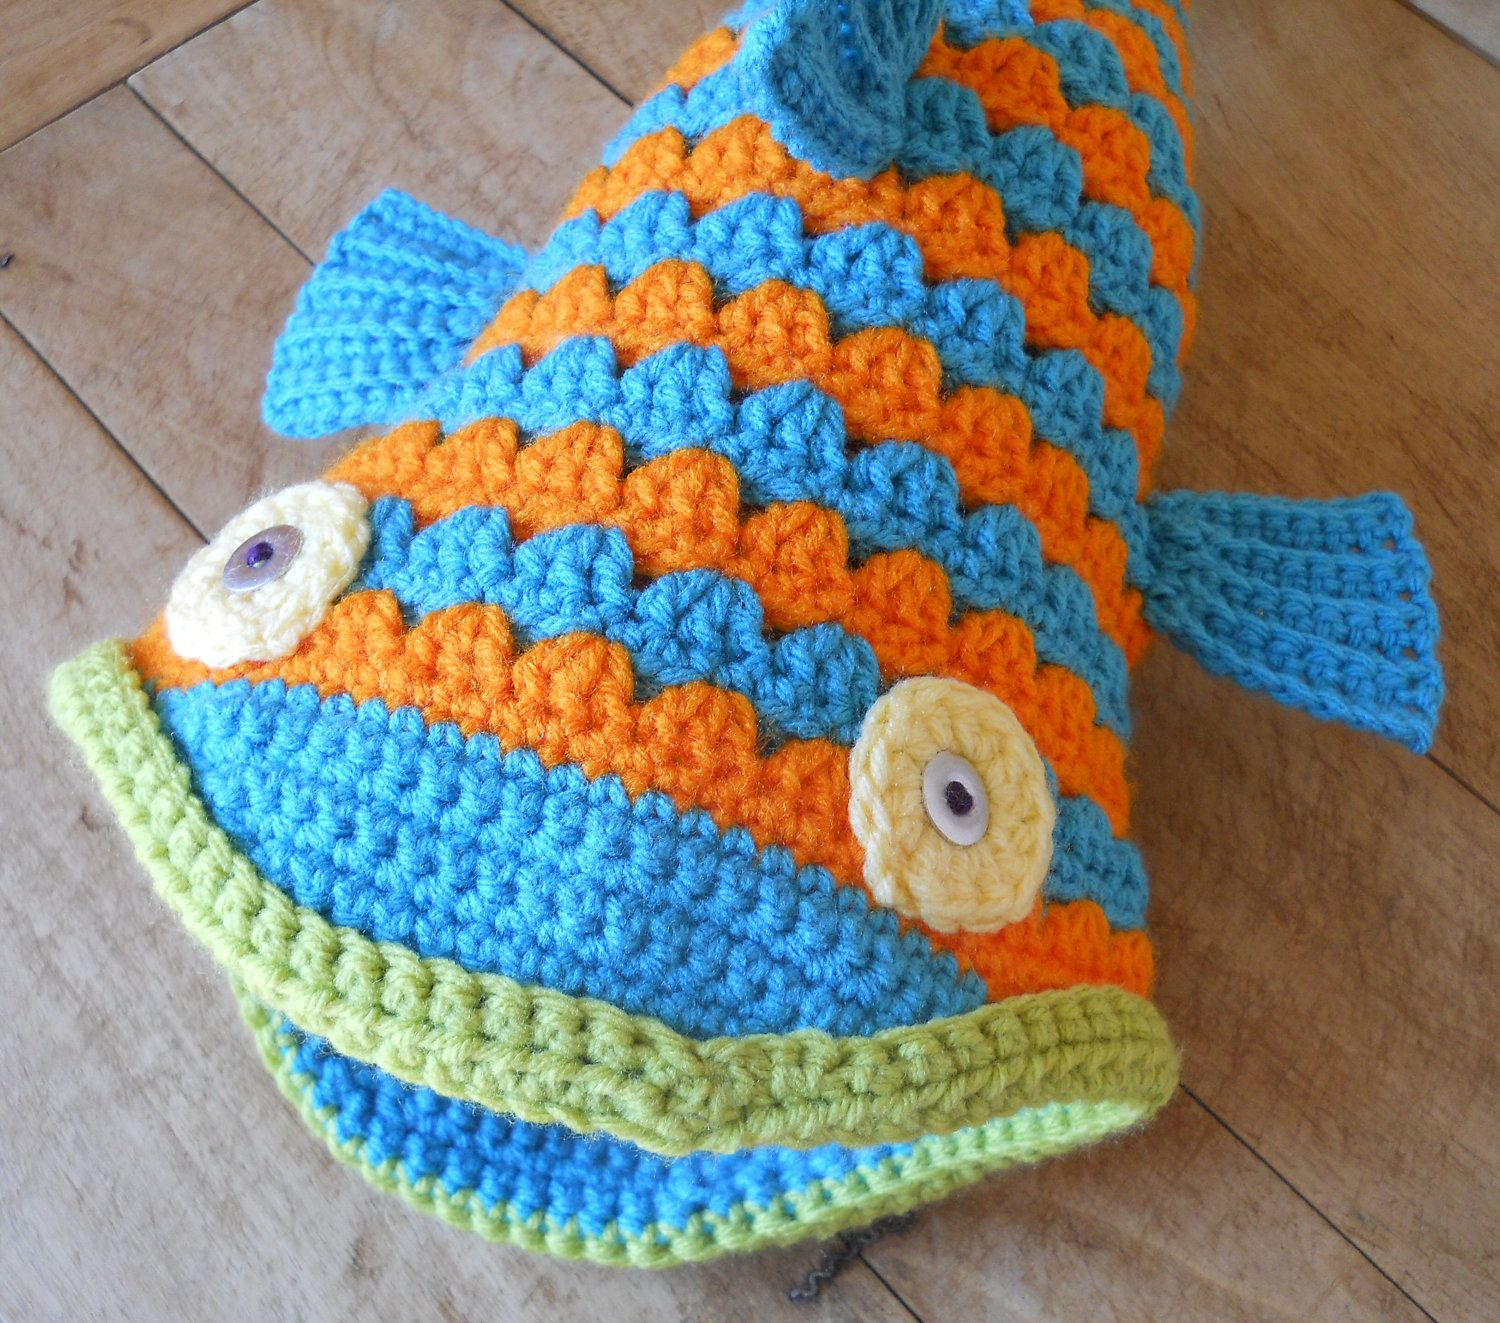 Fish Hat Crochet Pattern Crochet Fish Hat Pattern And Tutorial Stuff I Want To Make